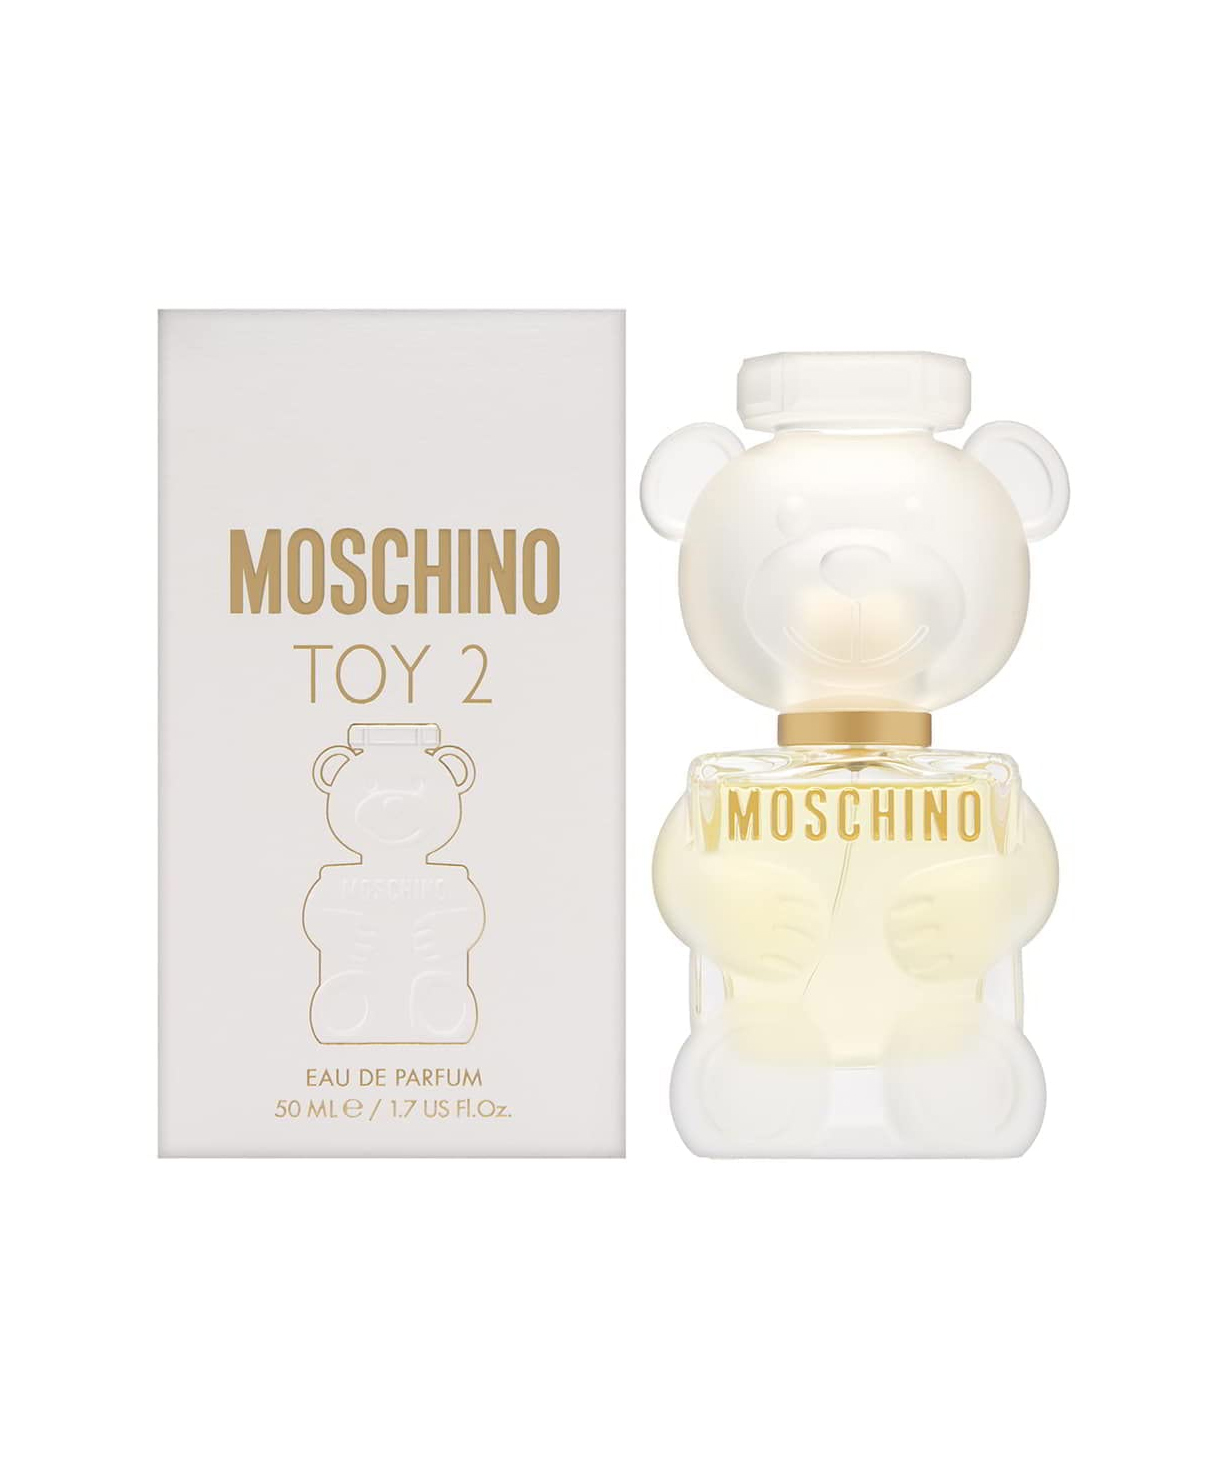 Perfume «Moschino» Toy 2, for women, 50 ml